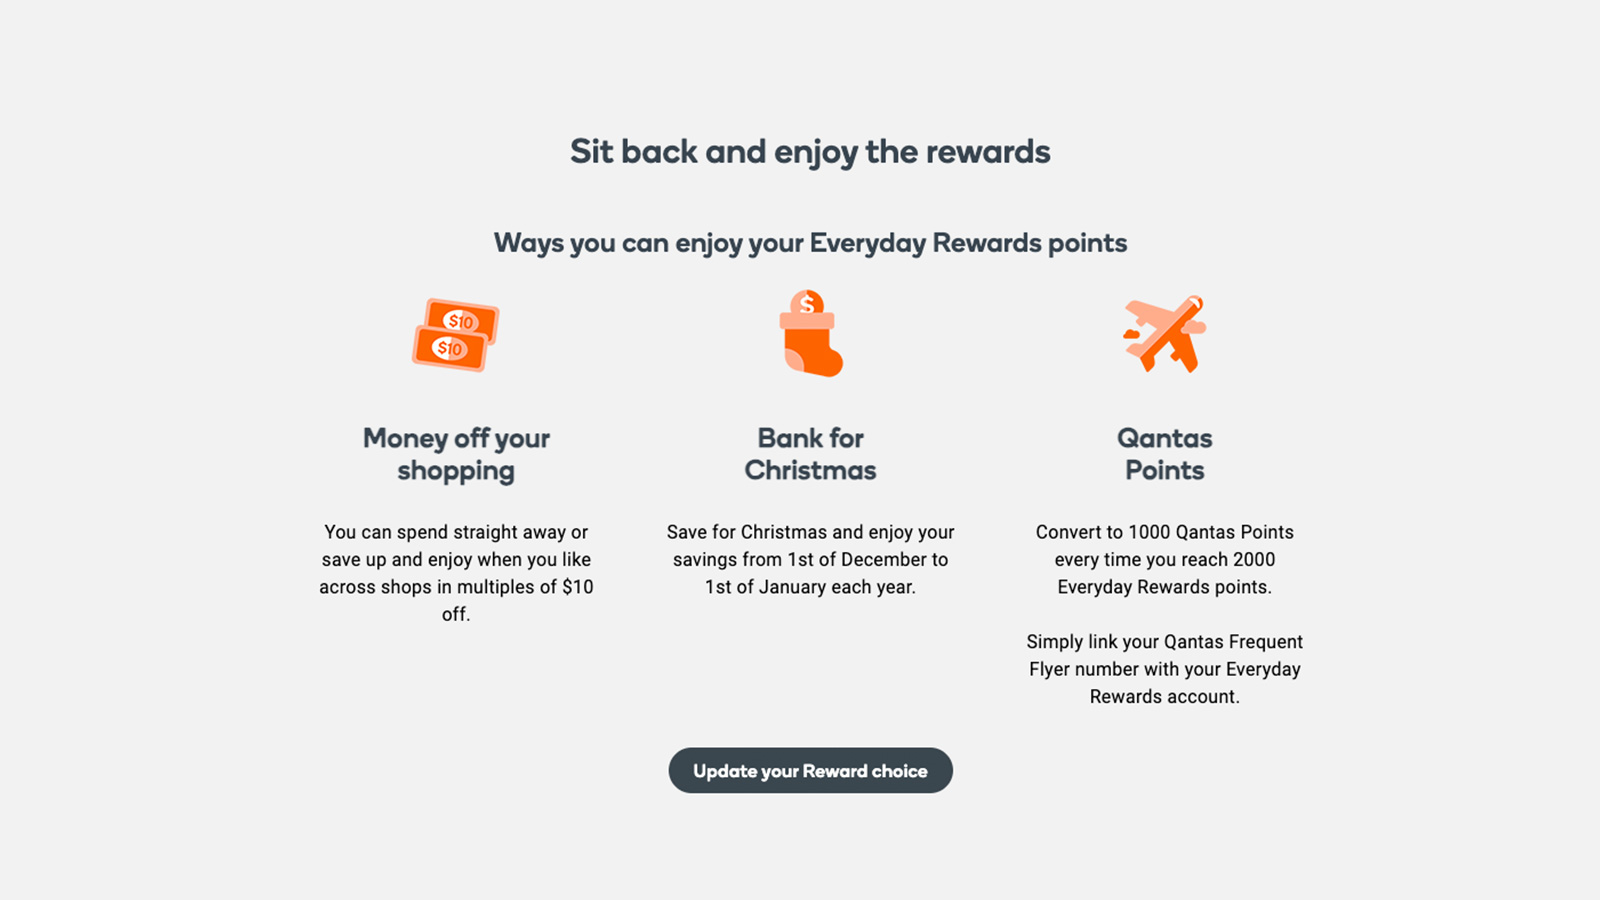 Choosing Everyday Rewards reward option